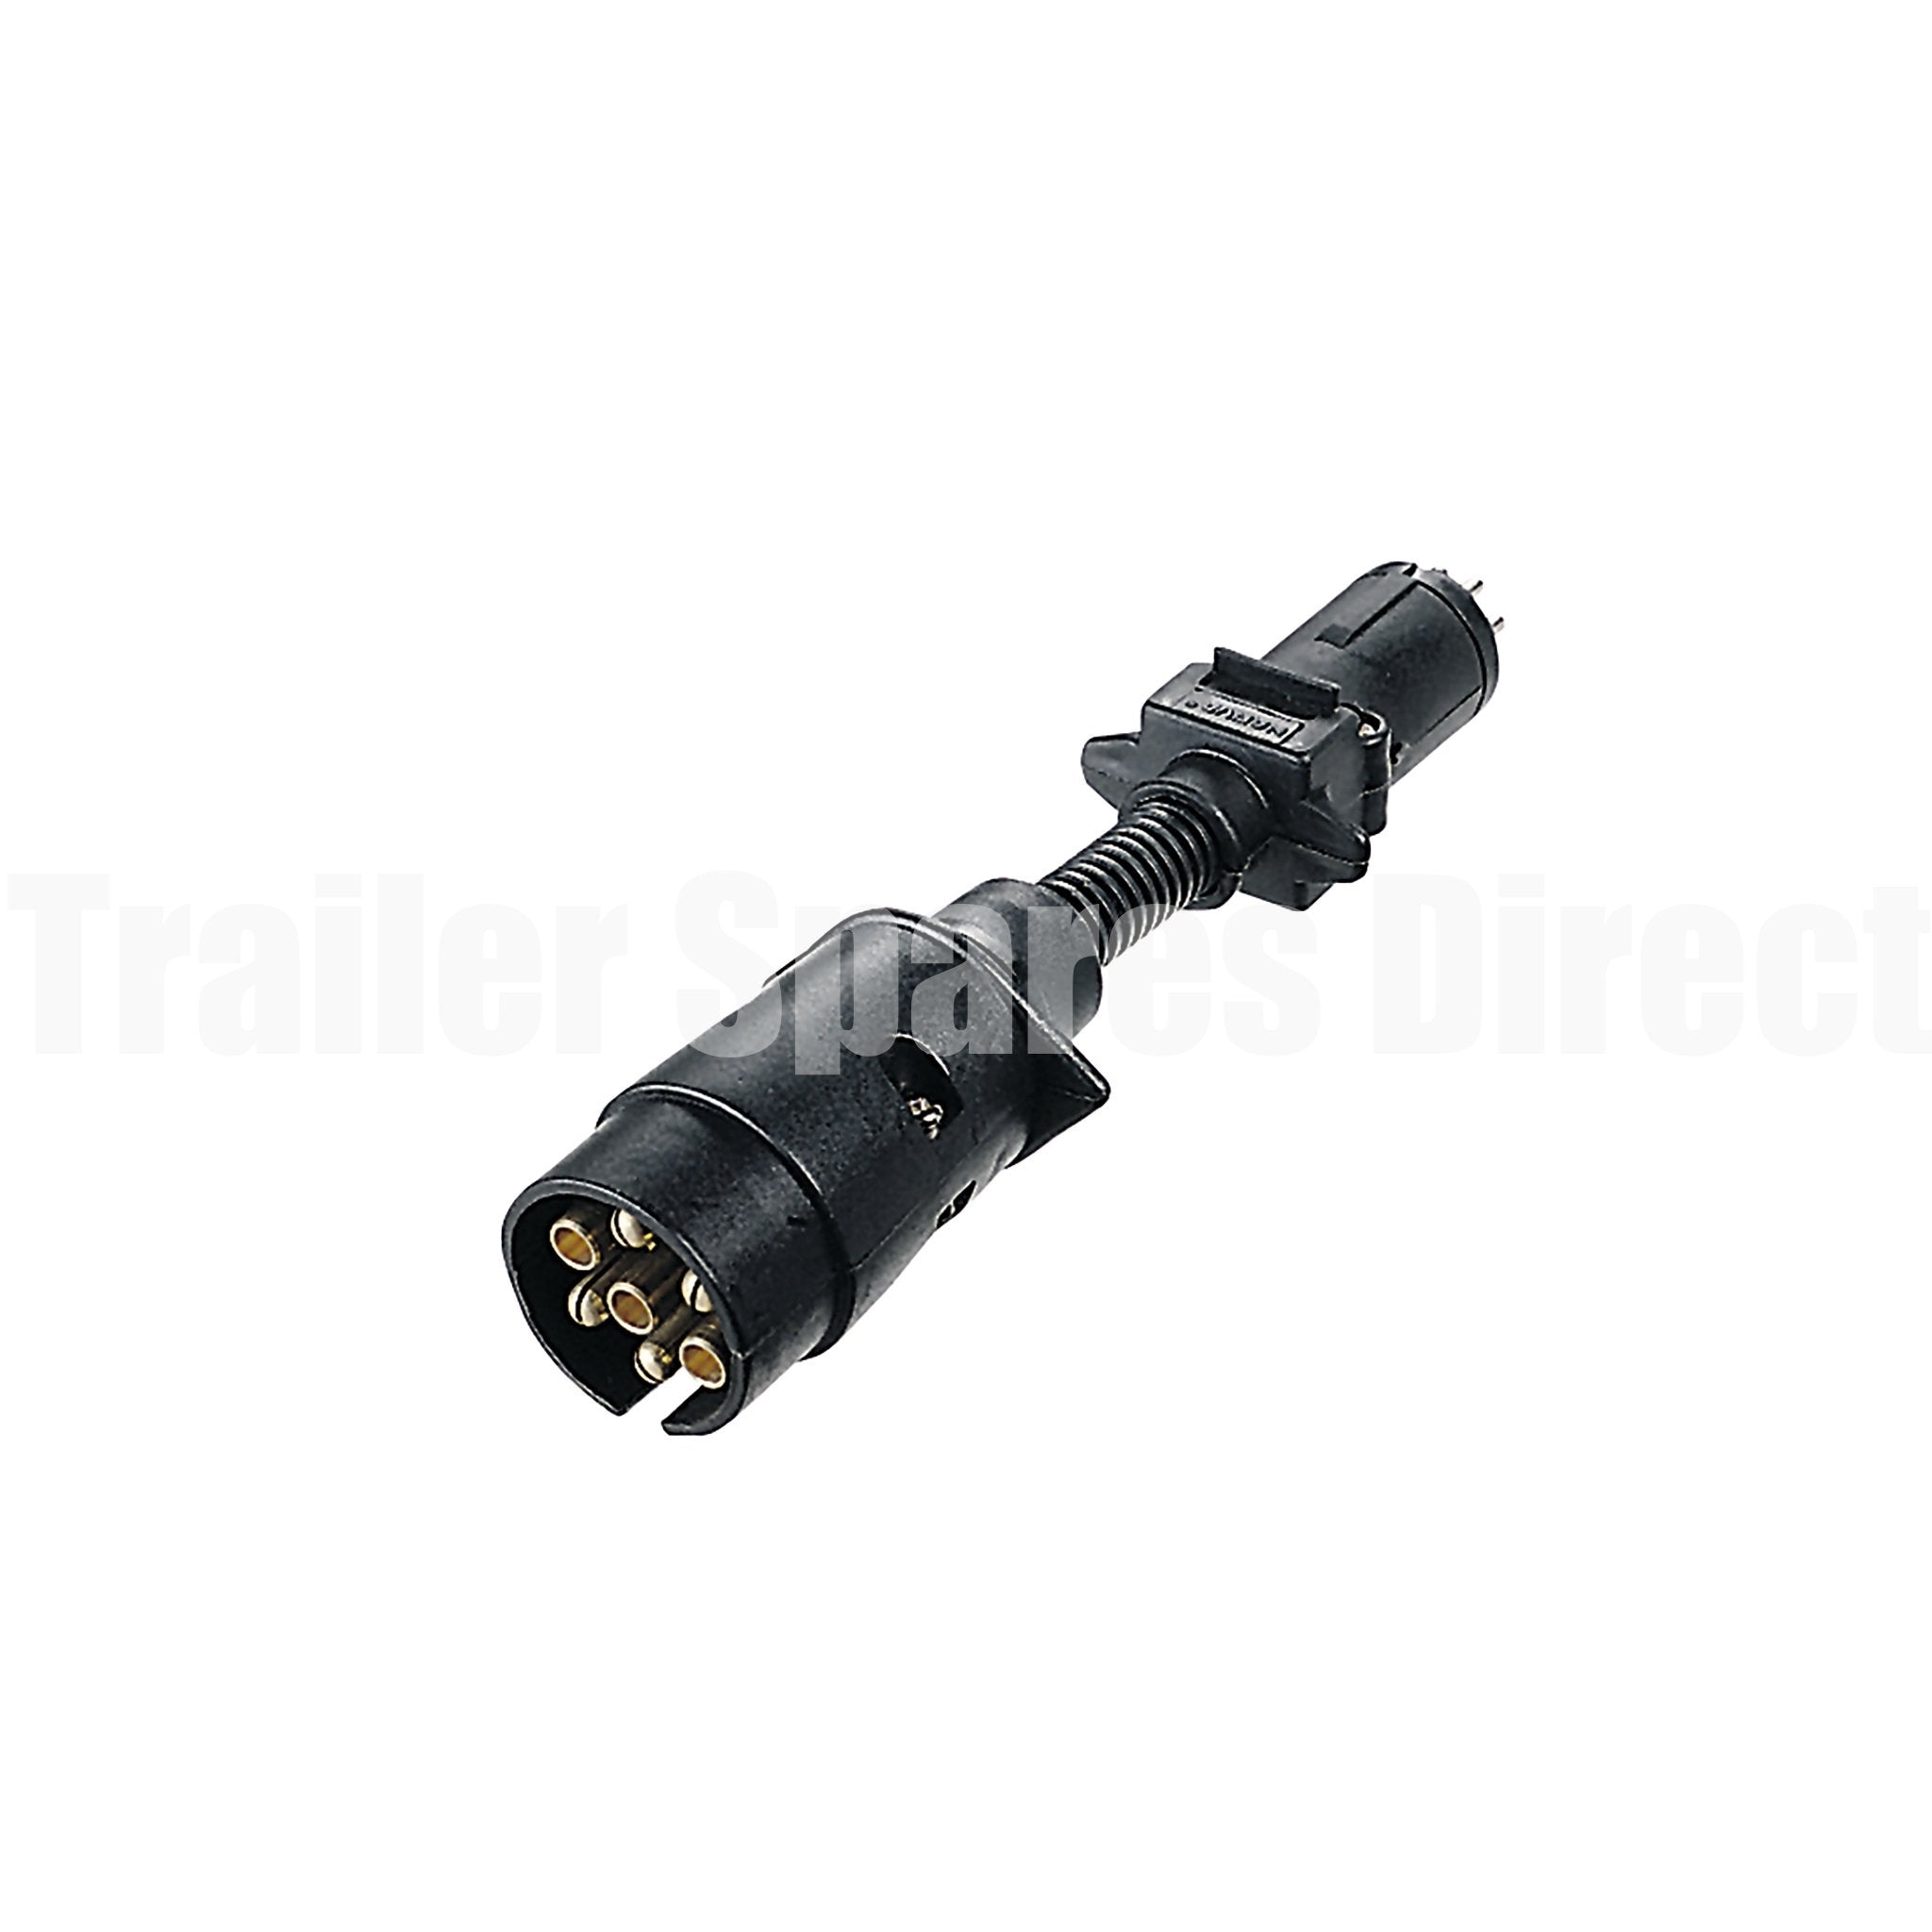 trailer plug adaptor 7 pin large round socket to 7 pin small round plug